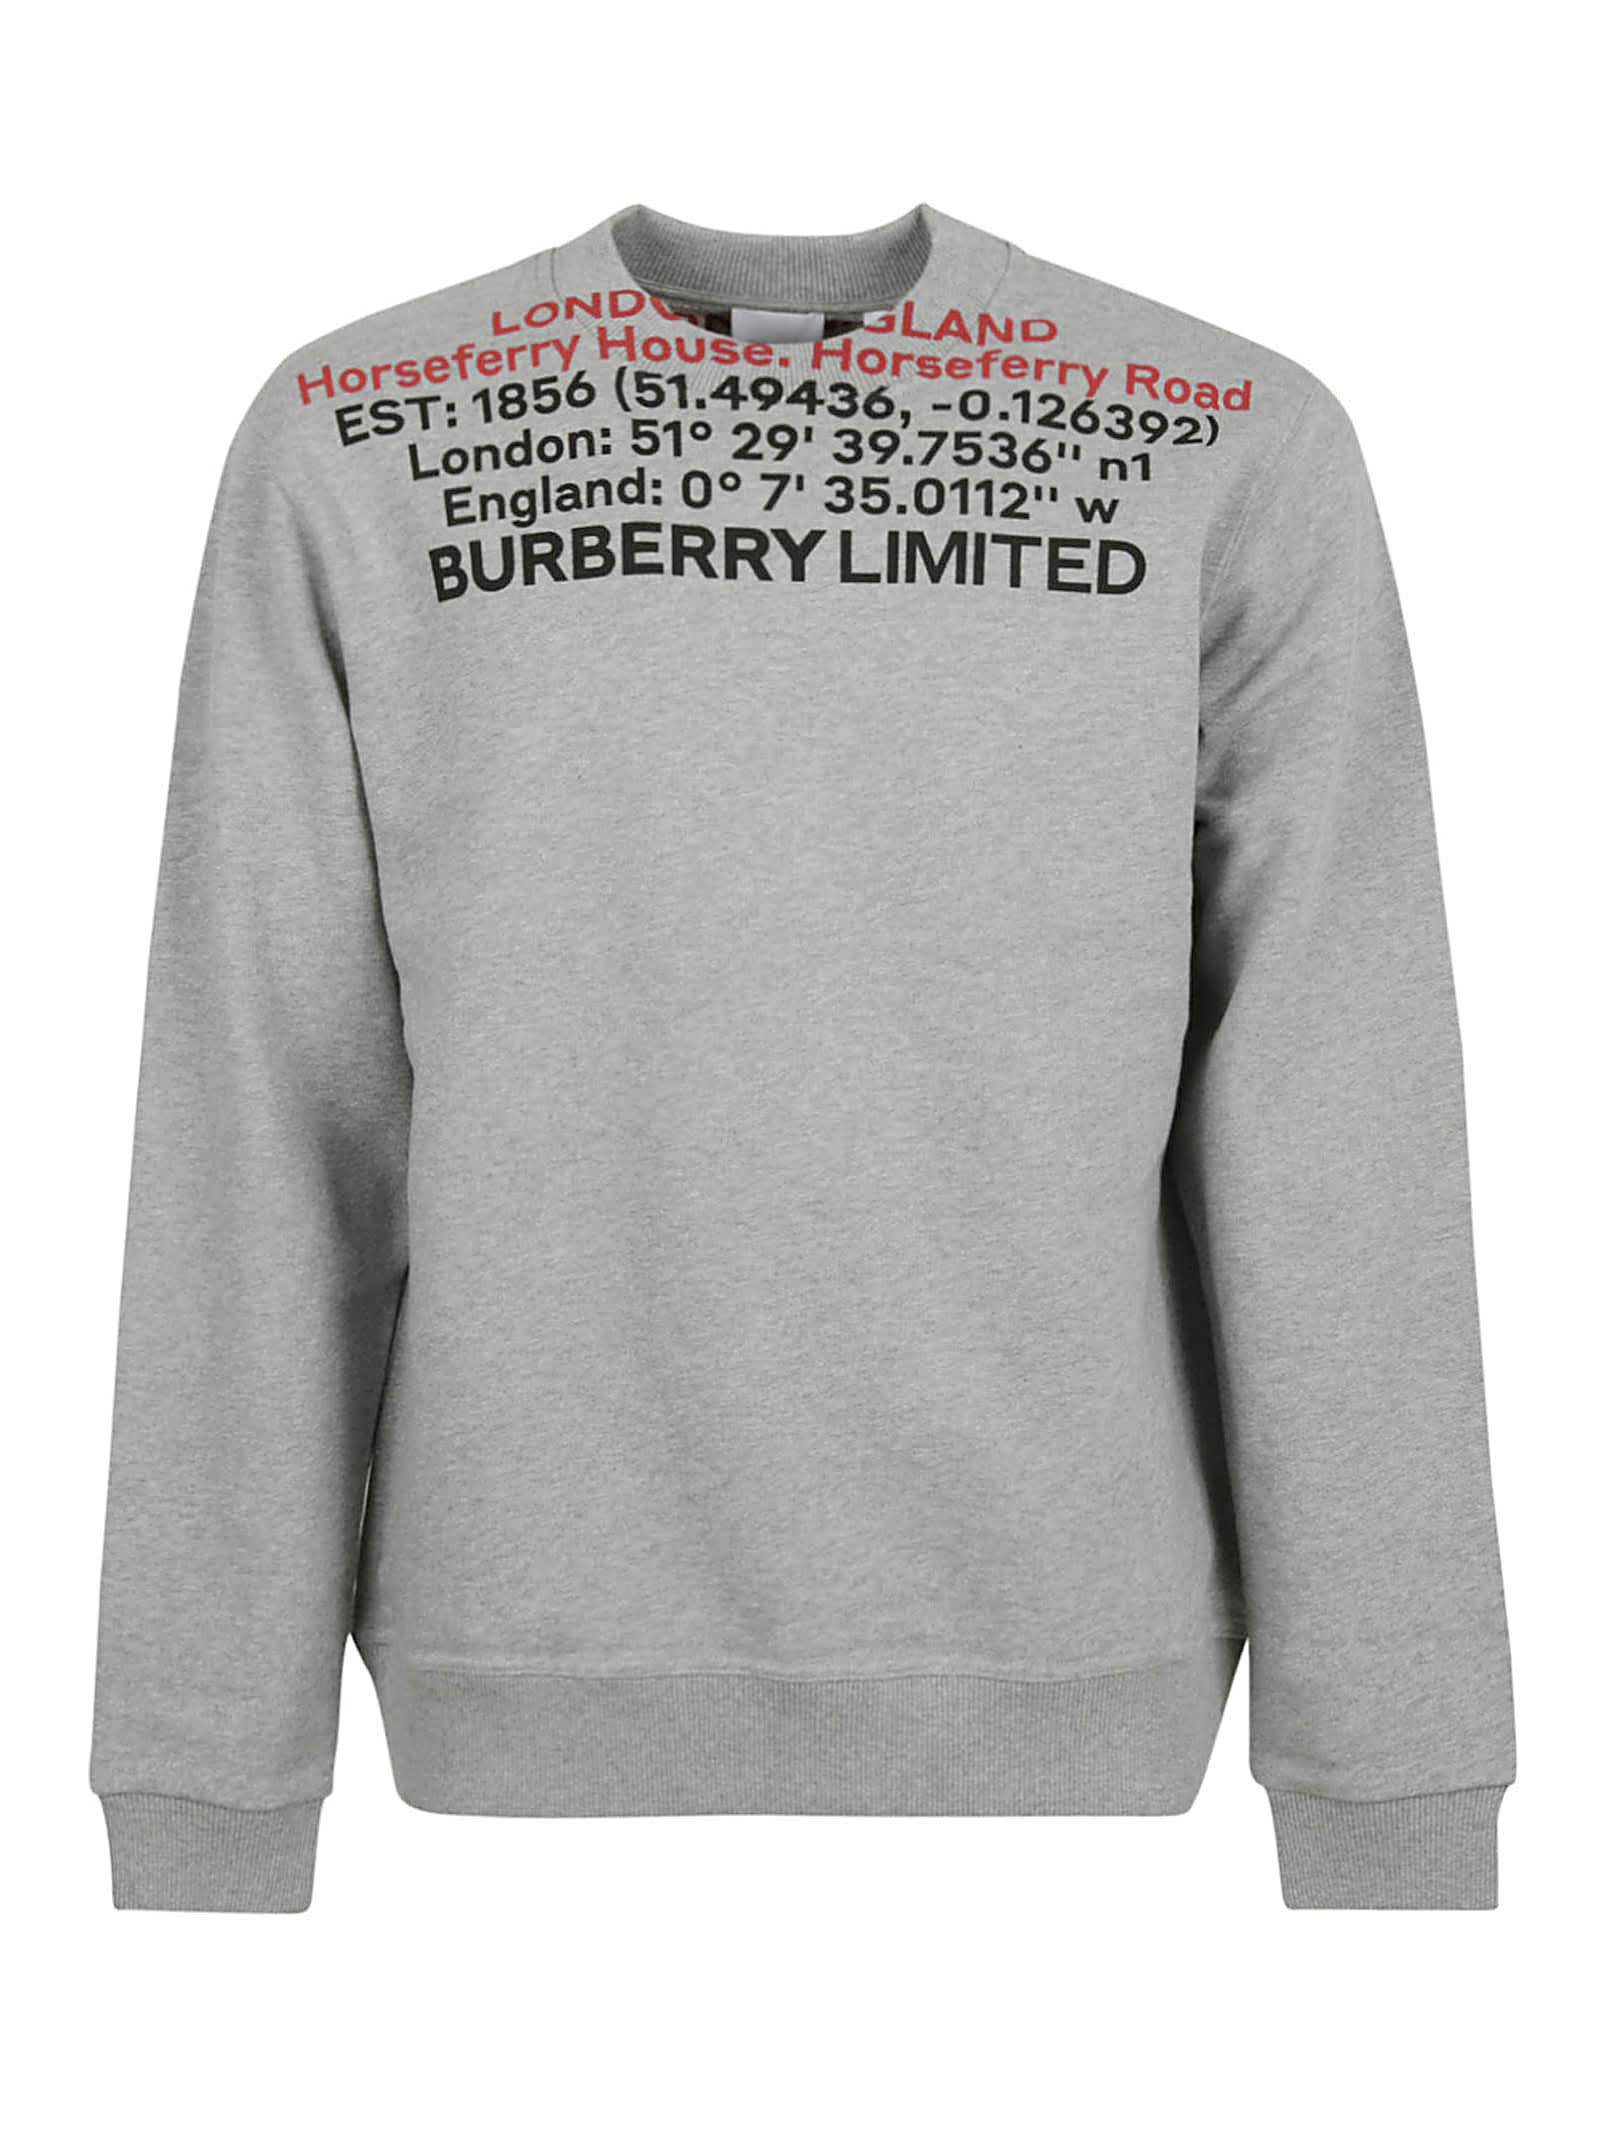 Burberry Limited Sweatshirt